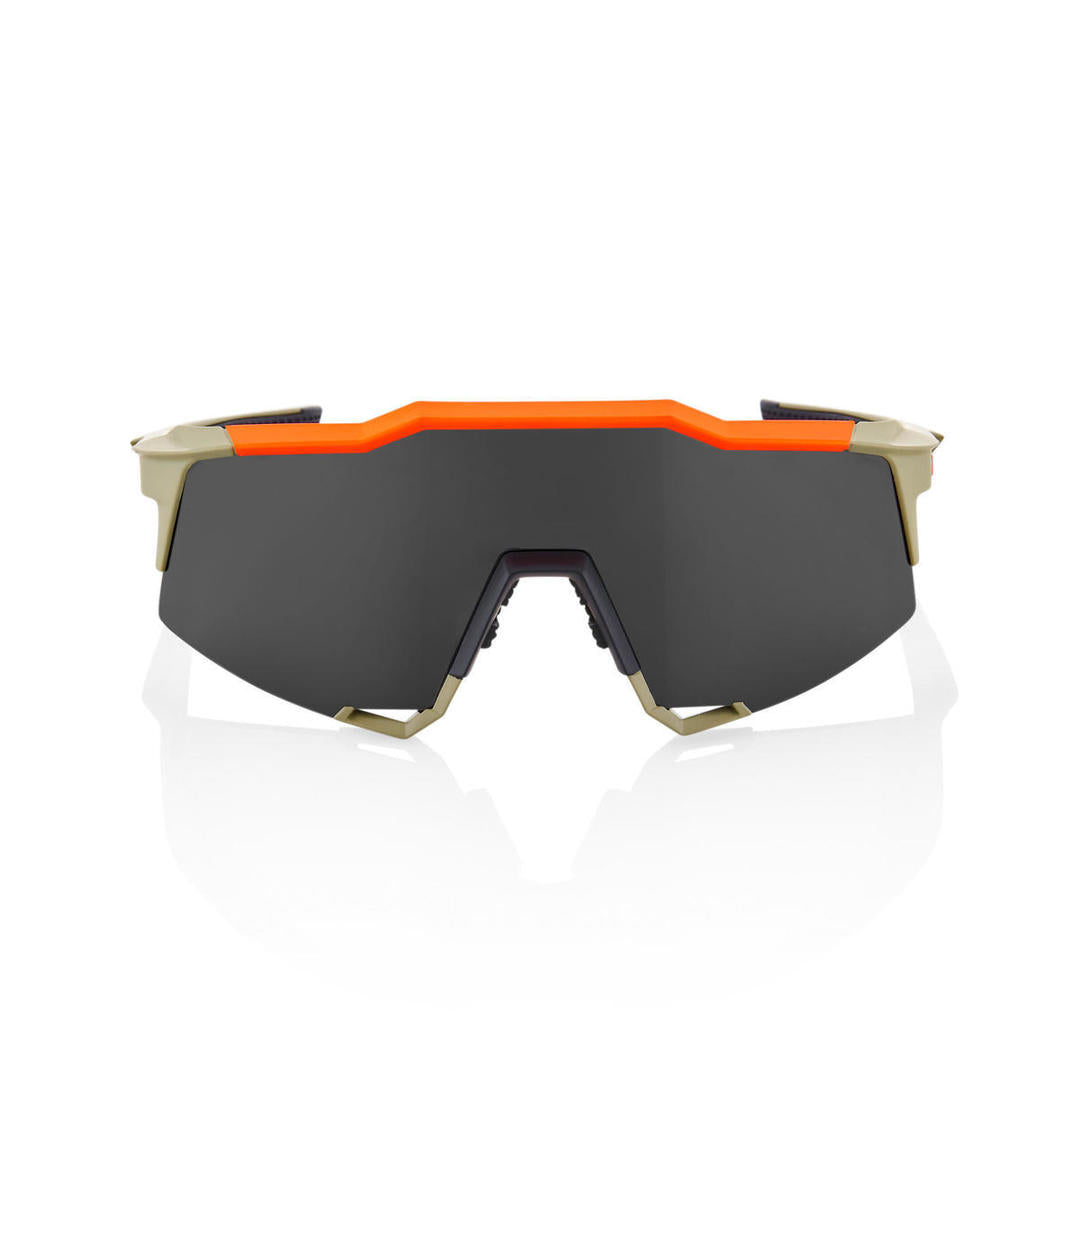 RIDE 100% Eyewear Speedcraft - Soft Tact Quicksand Smoke Lens